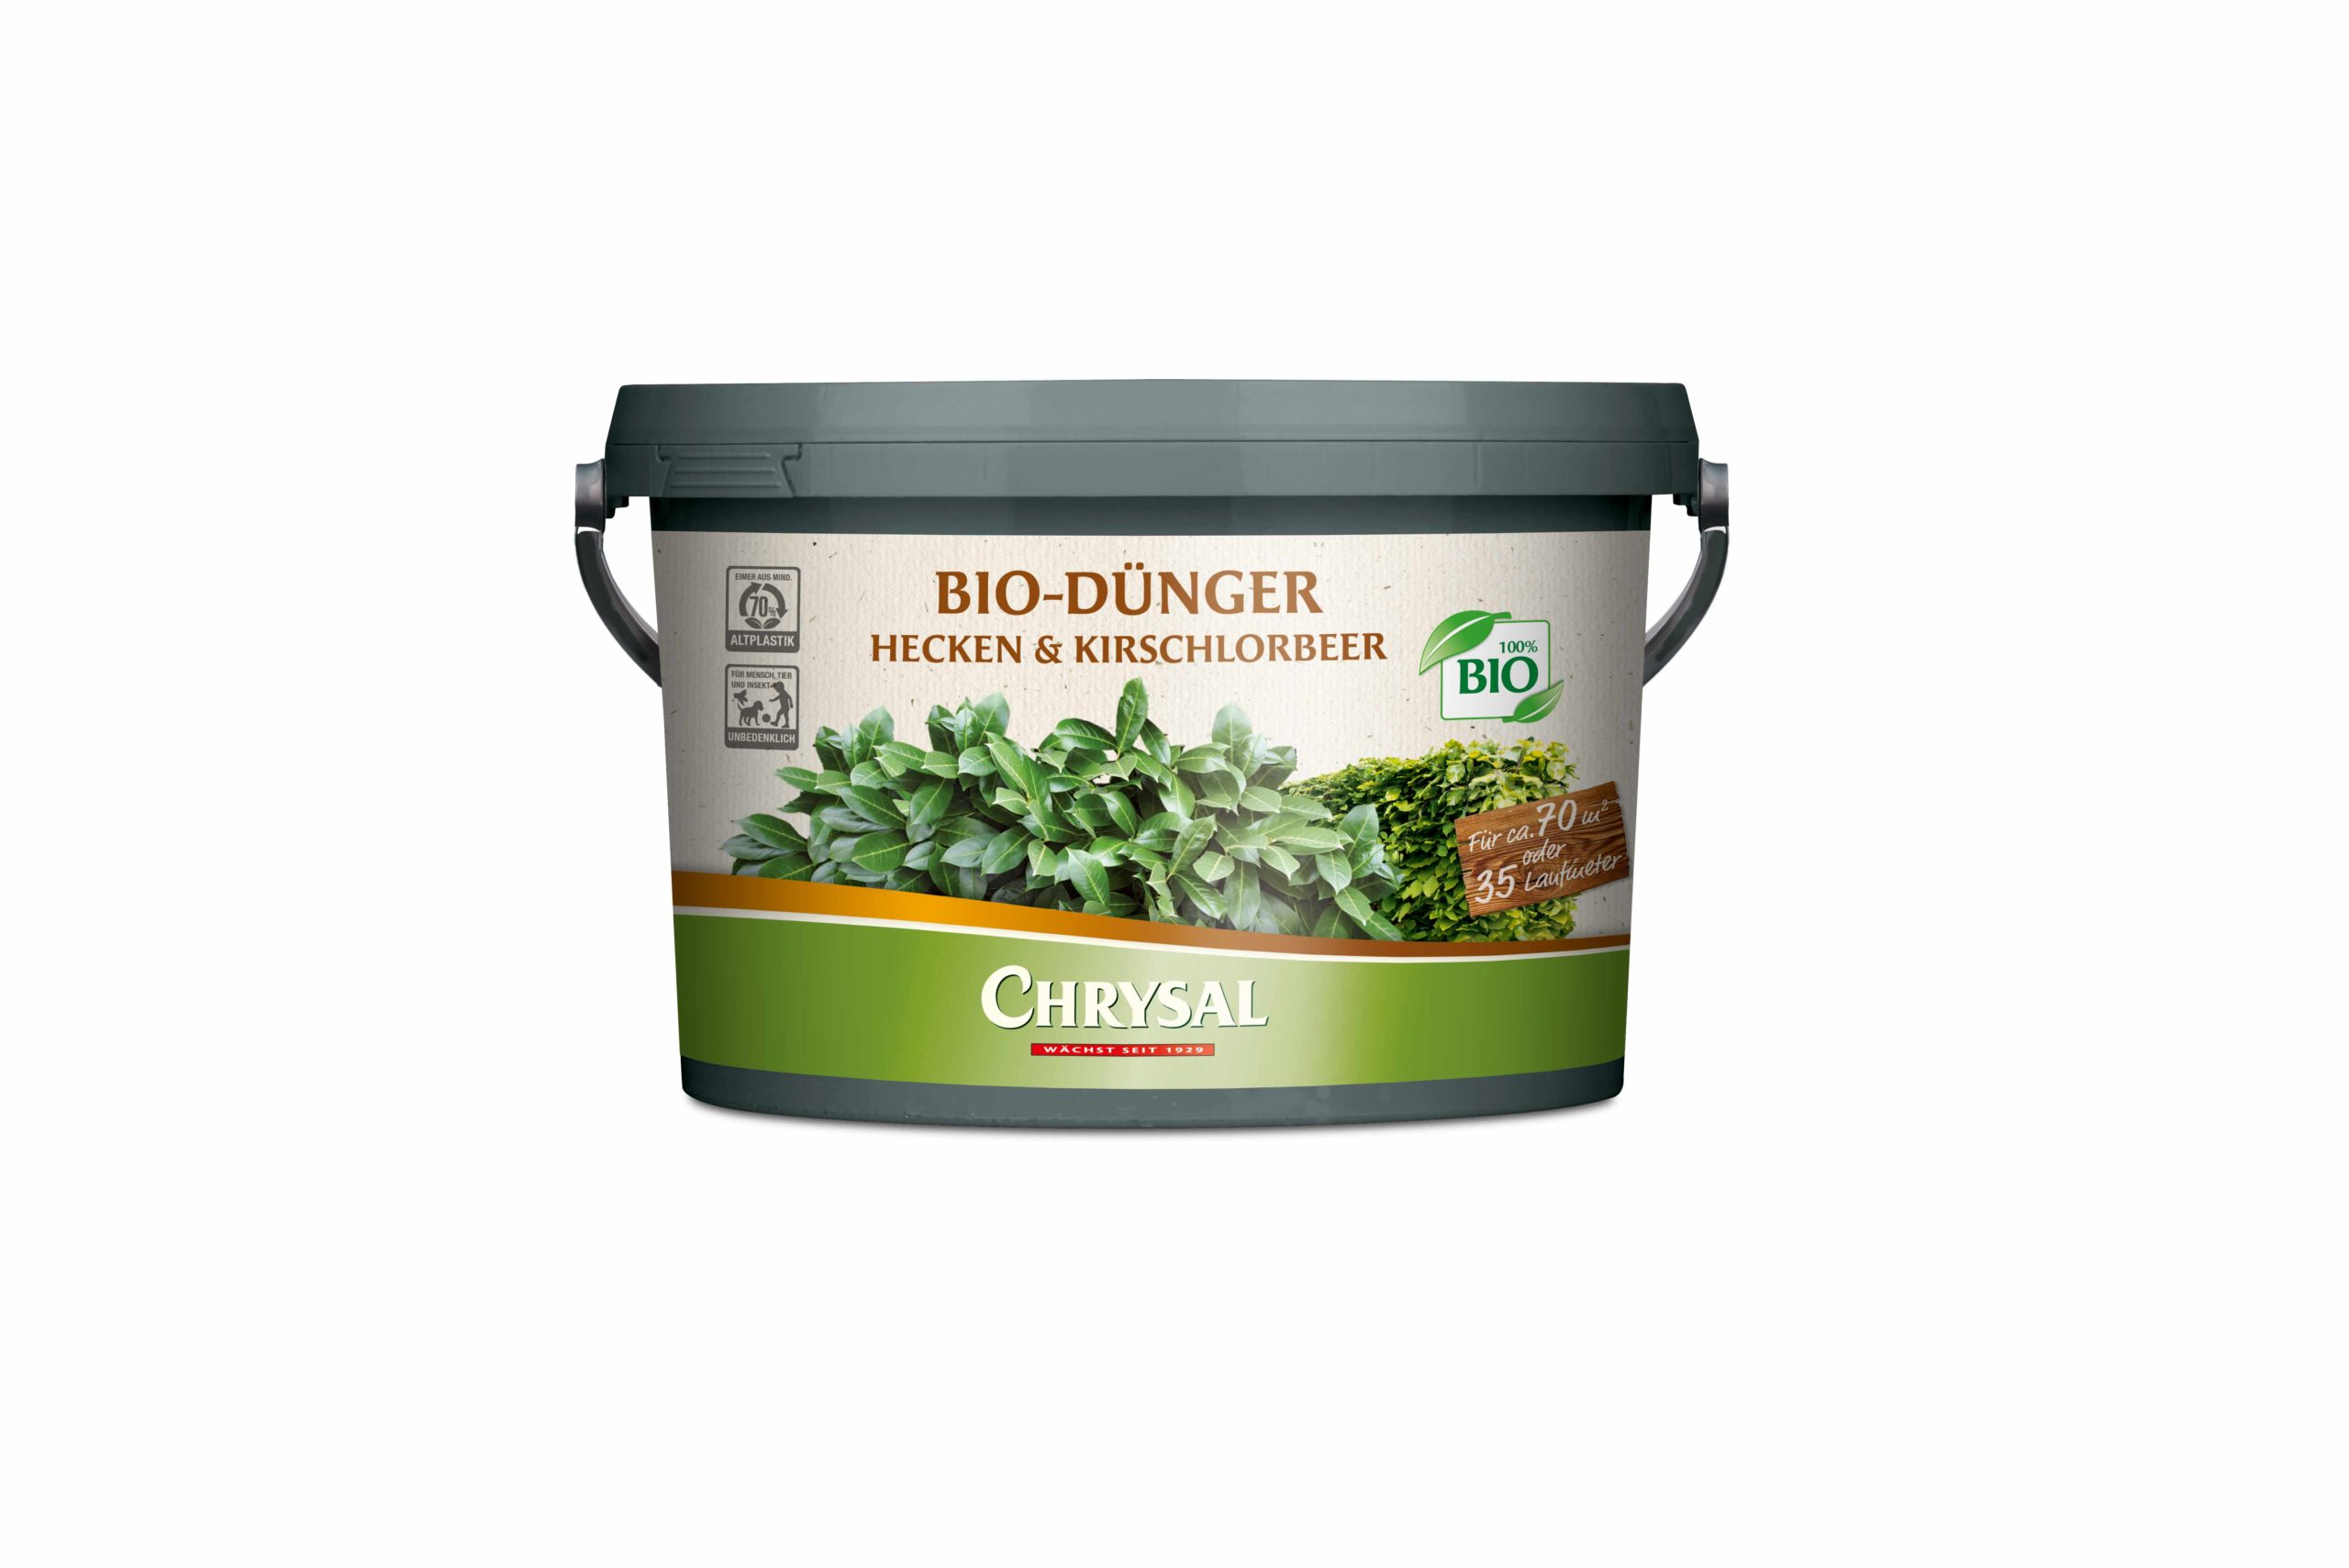 Chrysal Bio-Dünger Hecken & Kirschlorbeer